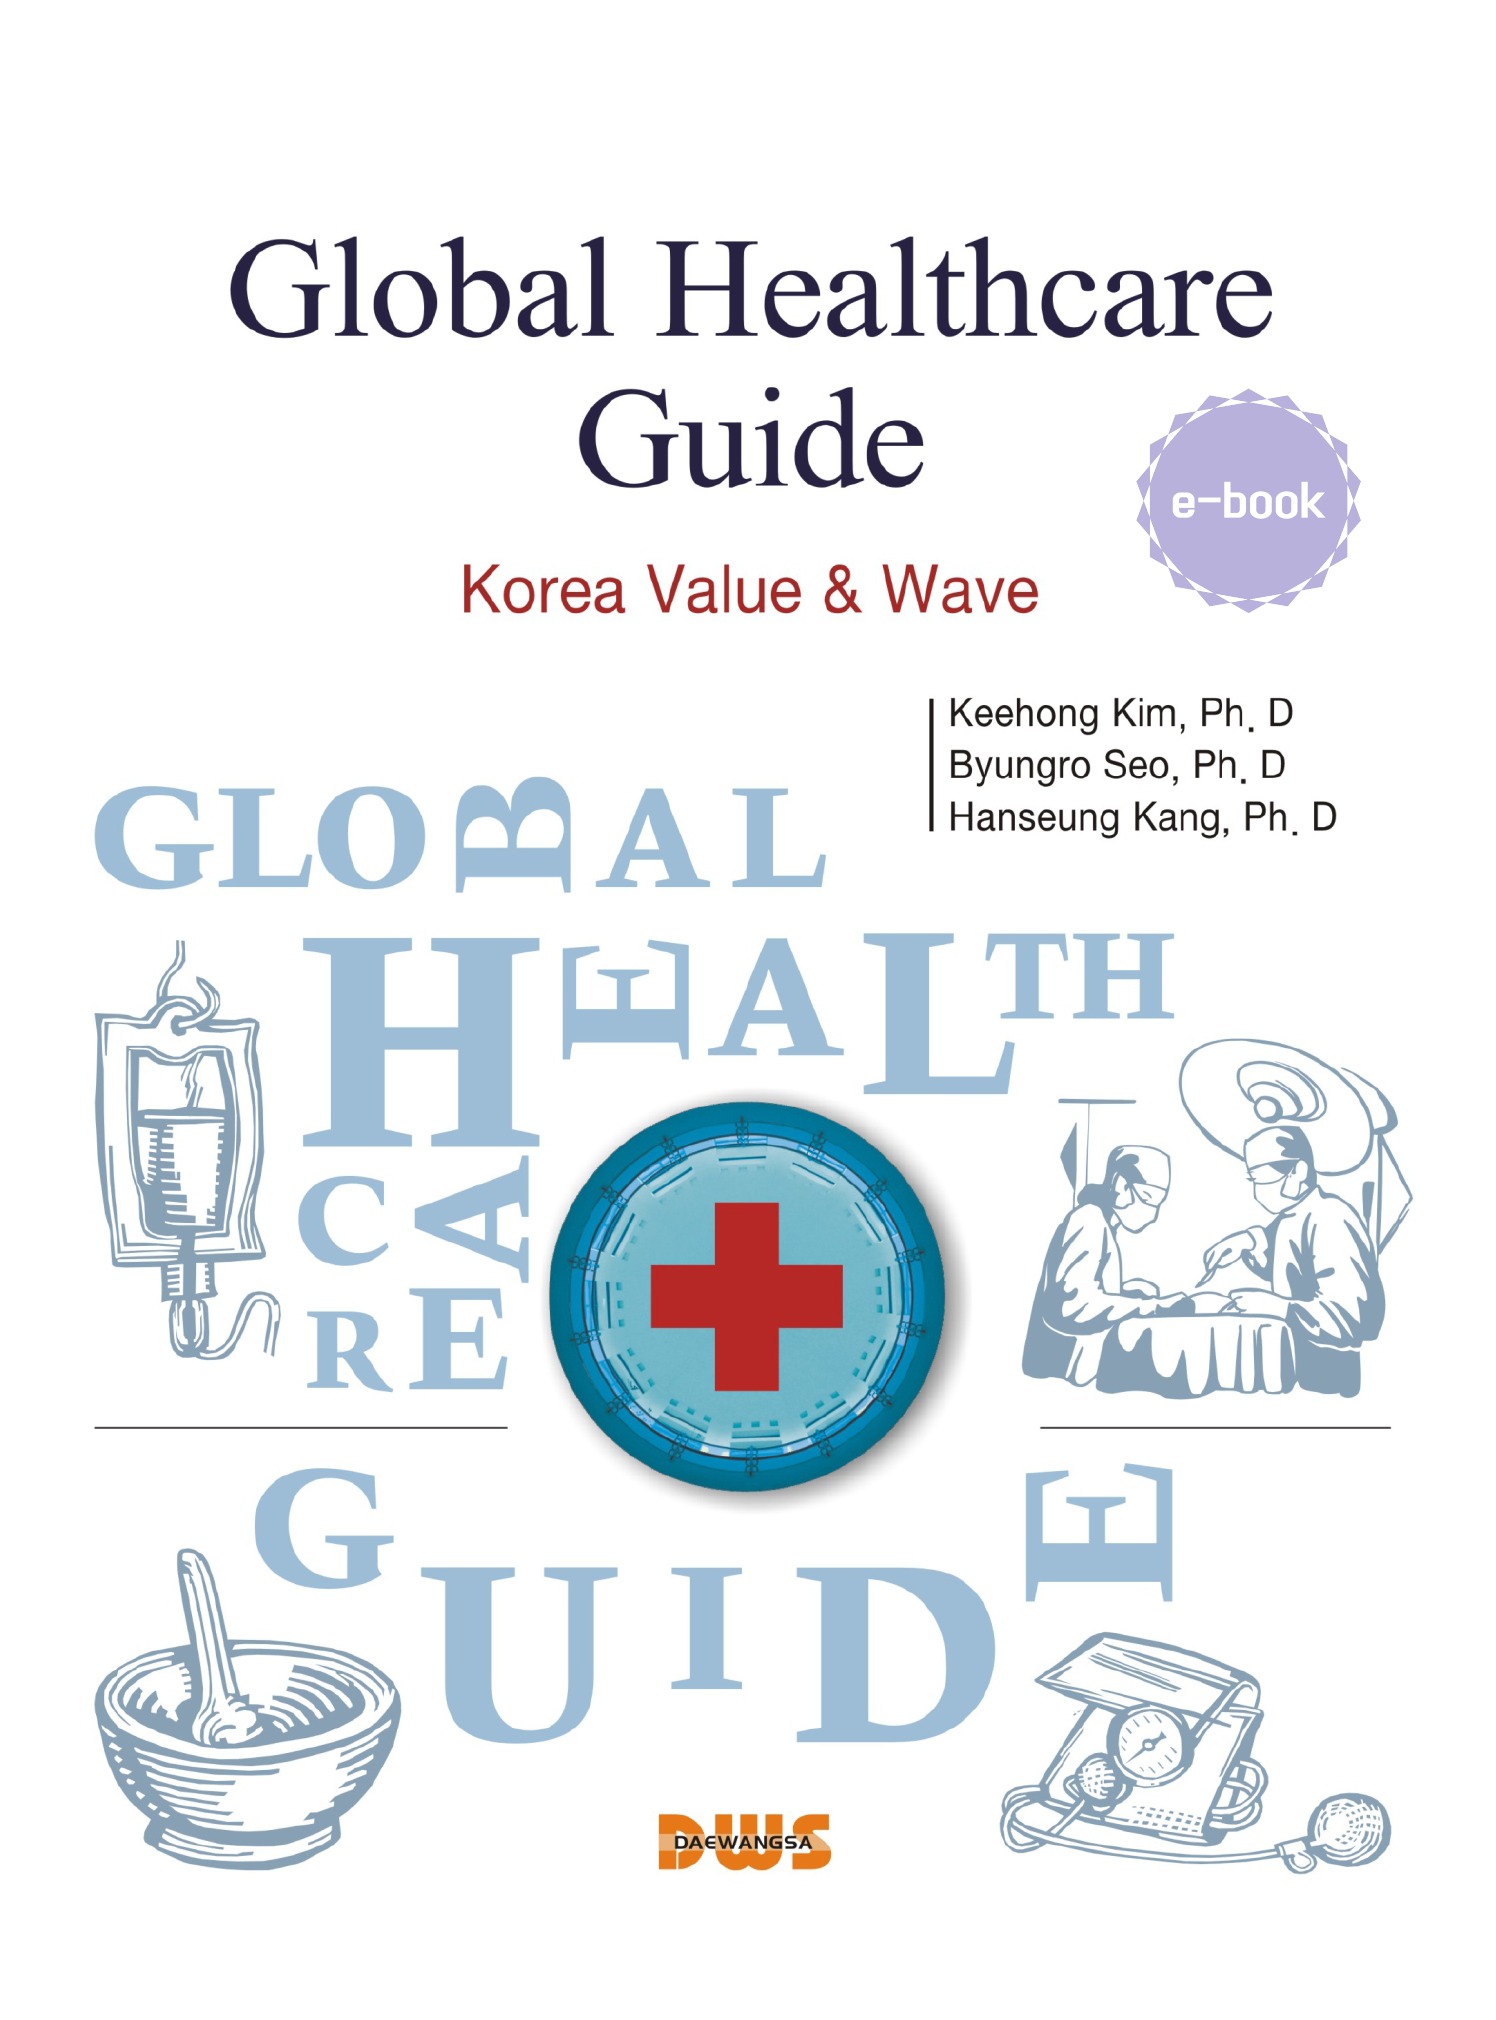 Global Healthcare Guide: Korea Value & Wave